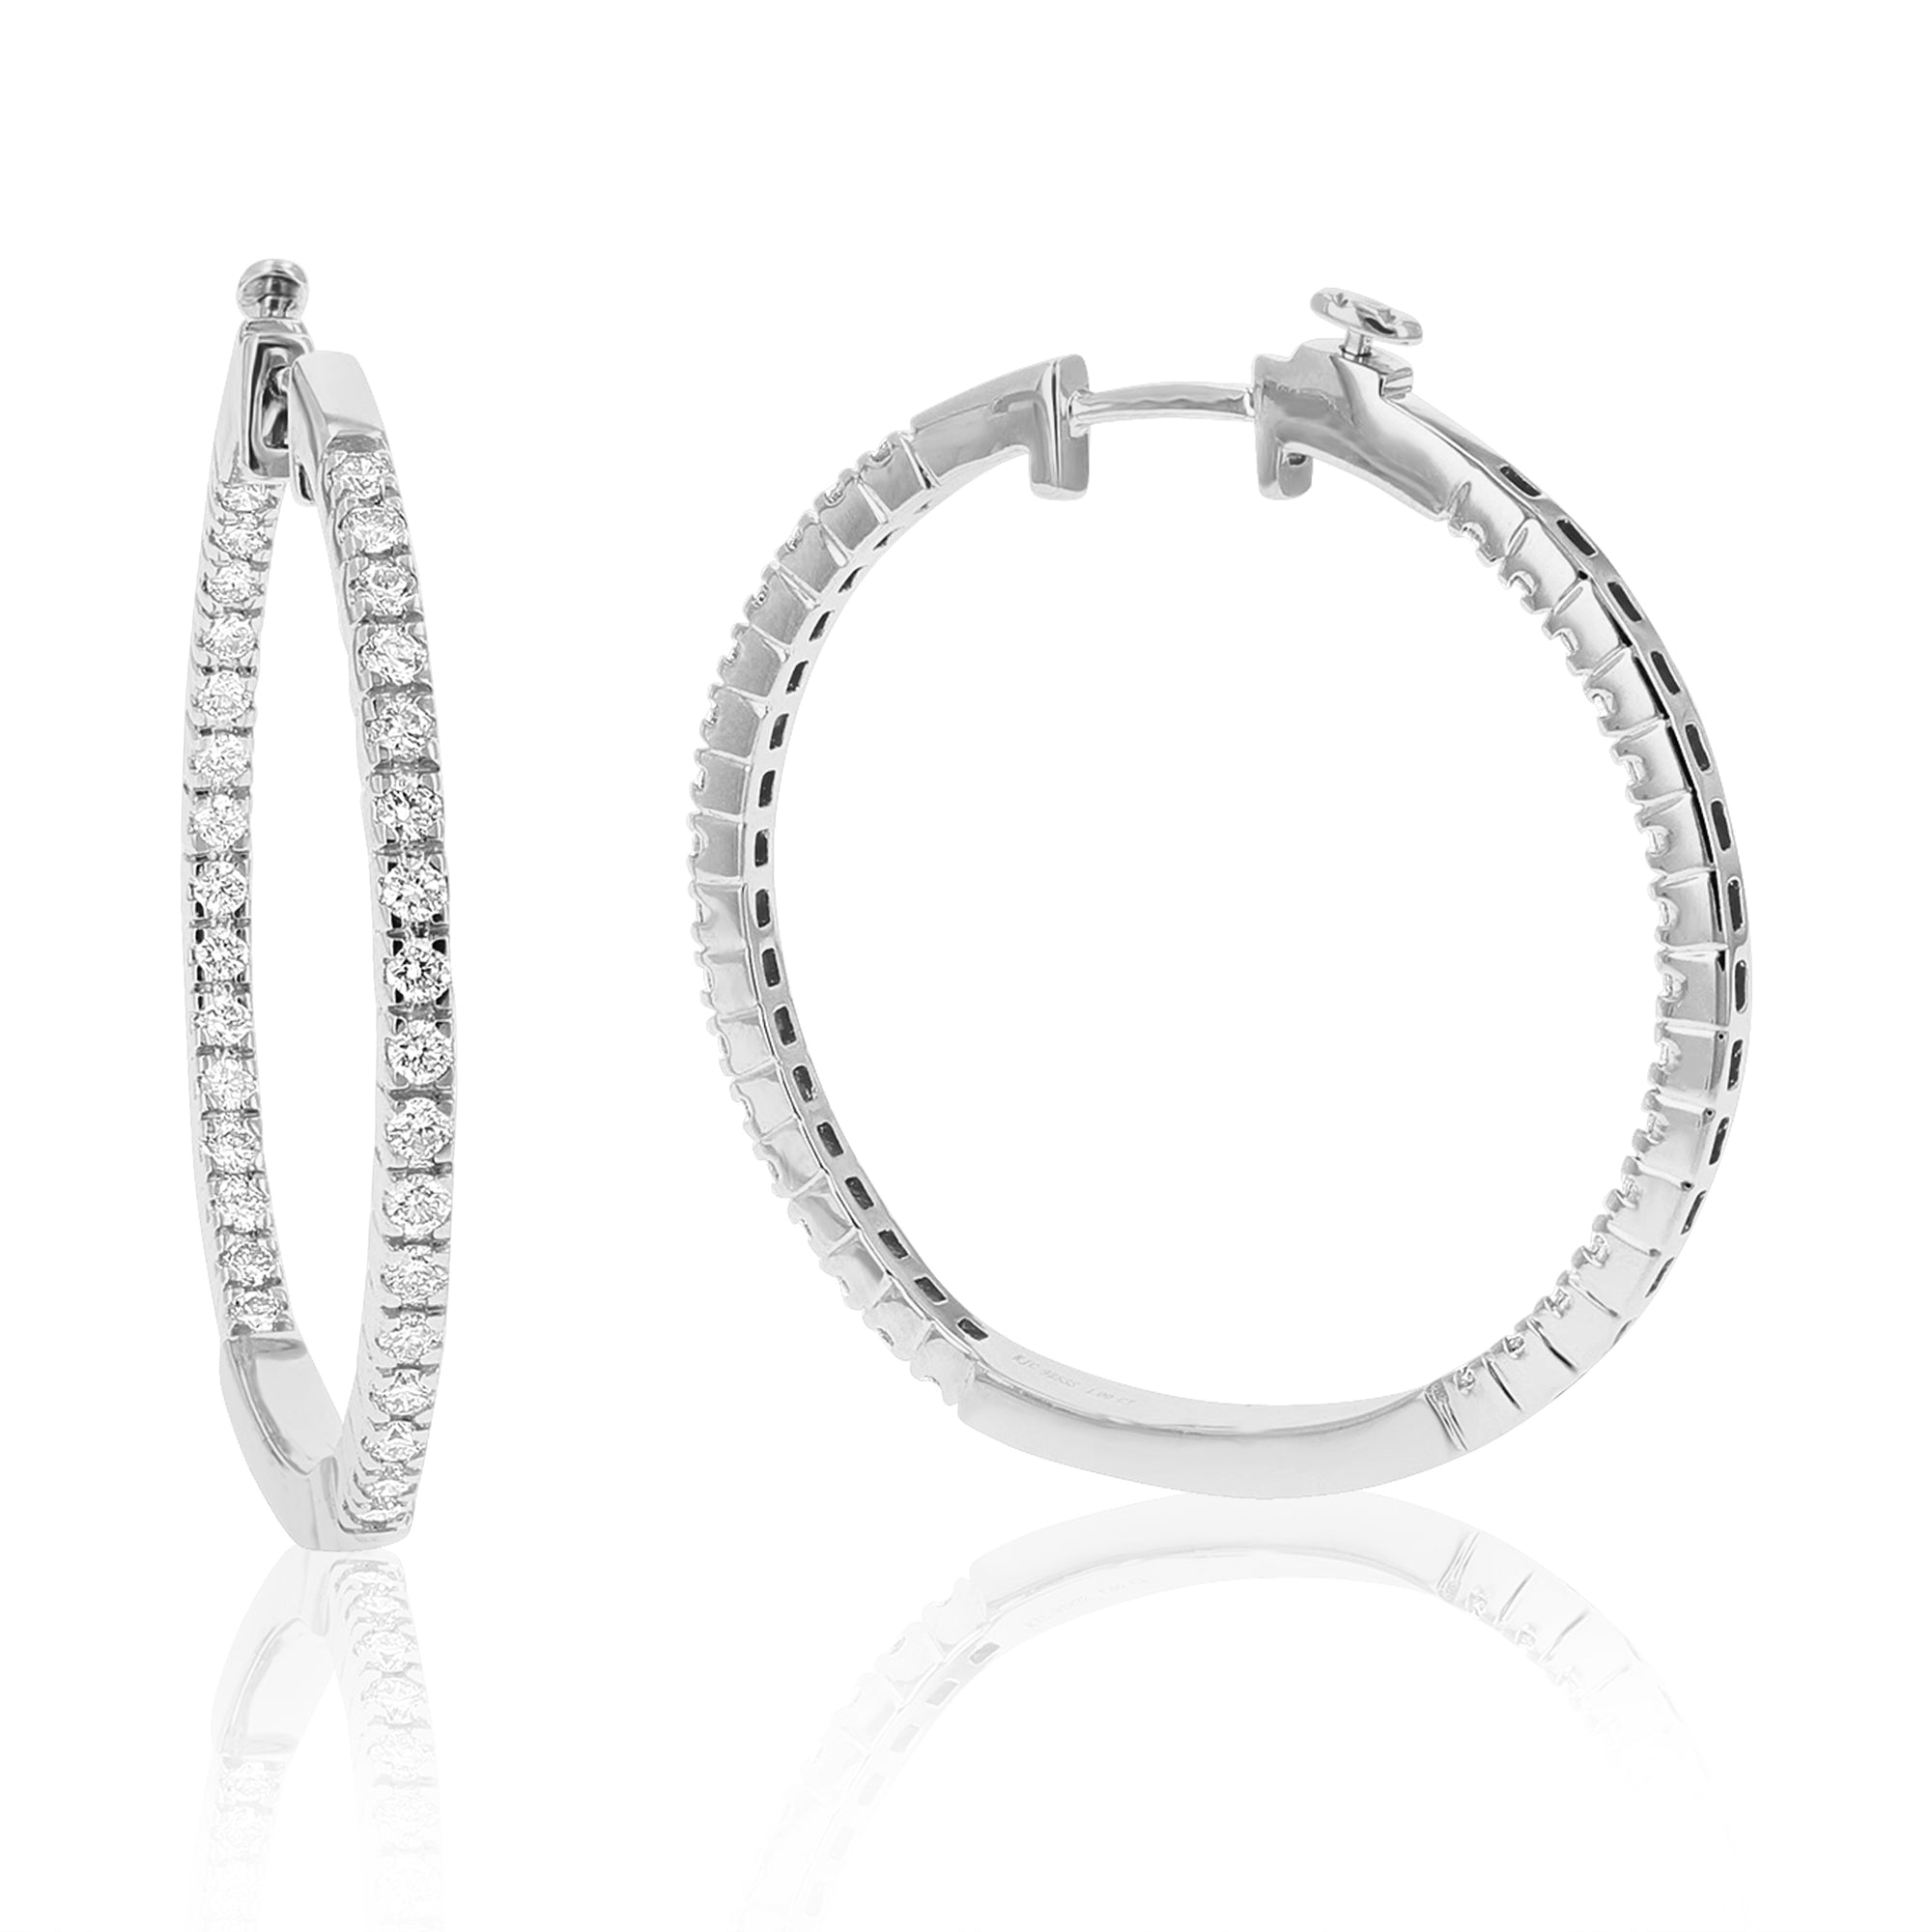 1 cttw Diamond Hoop Earrings for Women, Round Lab Grown Diamond Earrings in .925 Sterling Silver, Prong Setting, 1 Inch